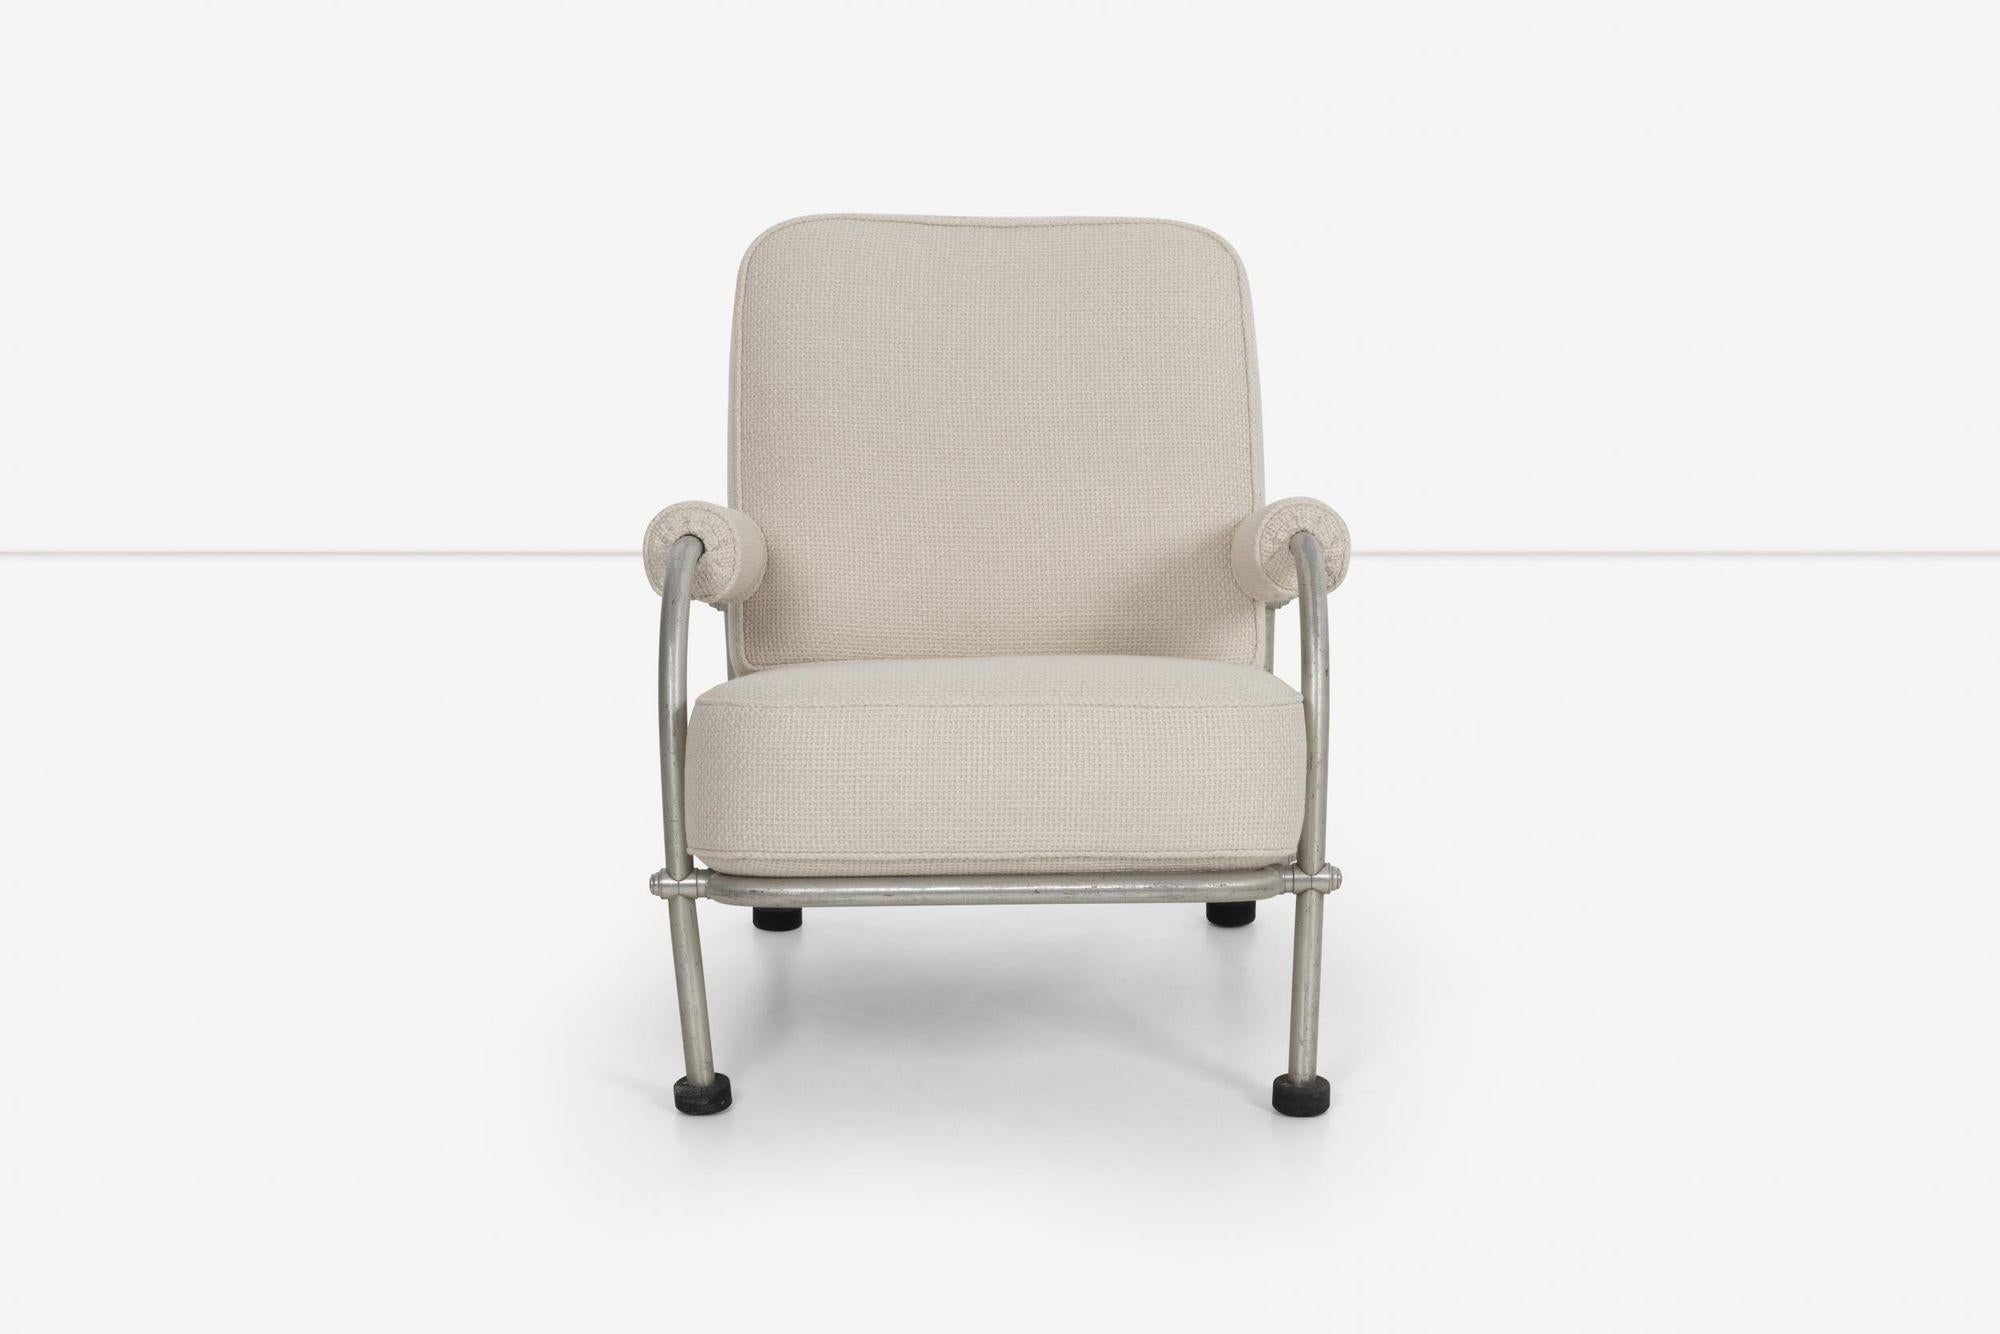 Warren McArthur Lounge Chairs by Warren McArthur Corporation
aluminum frame , upholstery Great Plains woven wool, rubber feet
Dimensions:
31